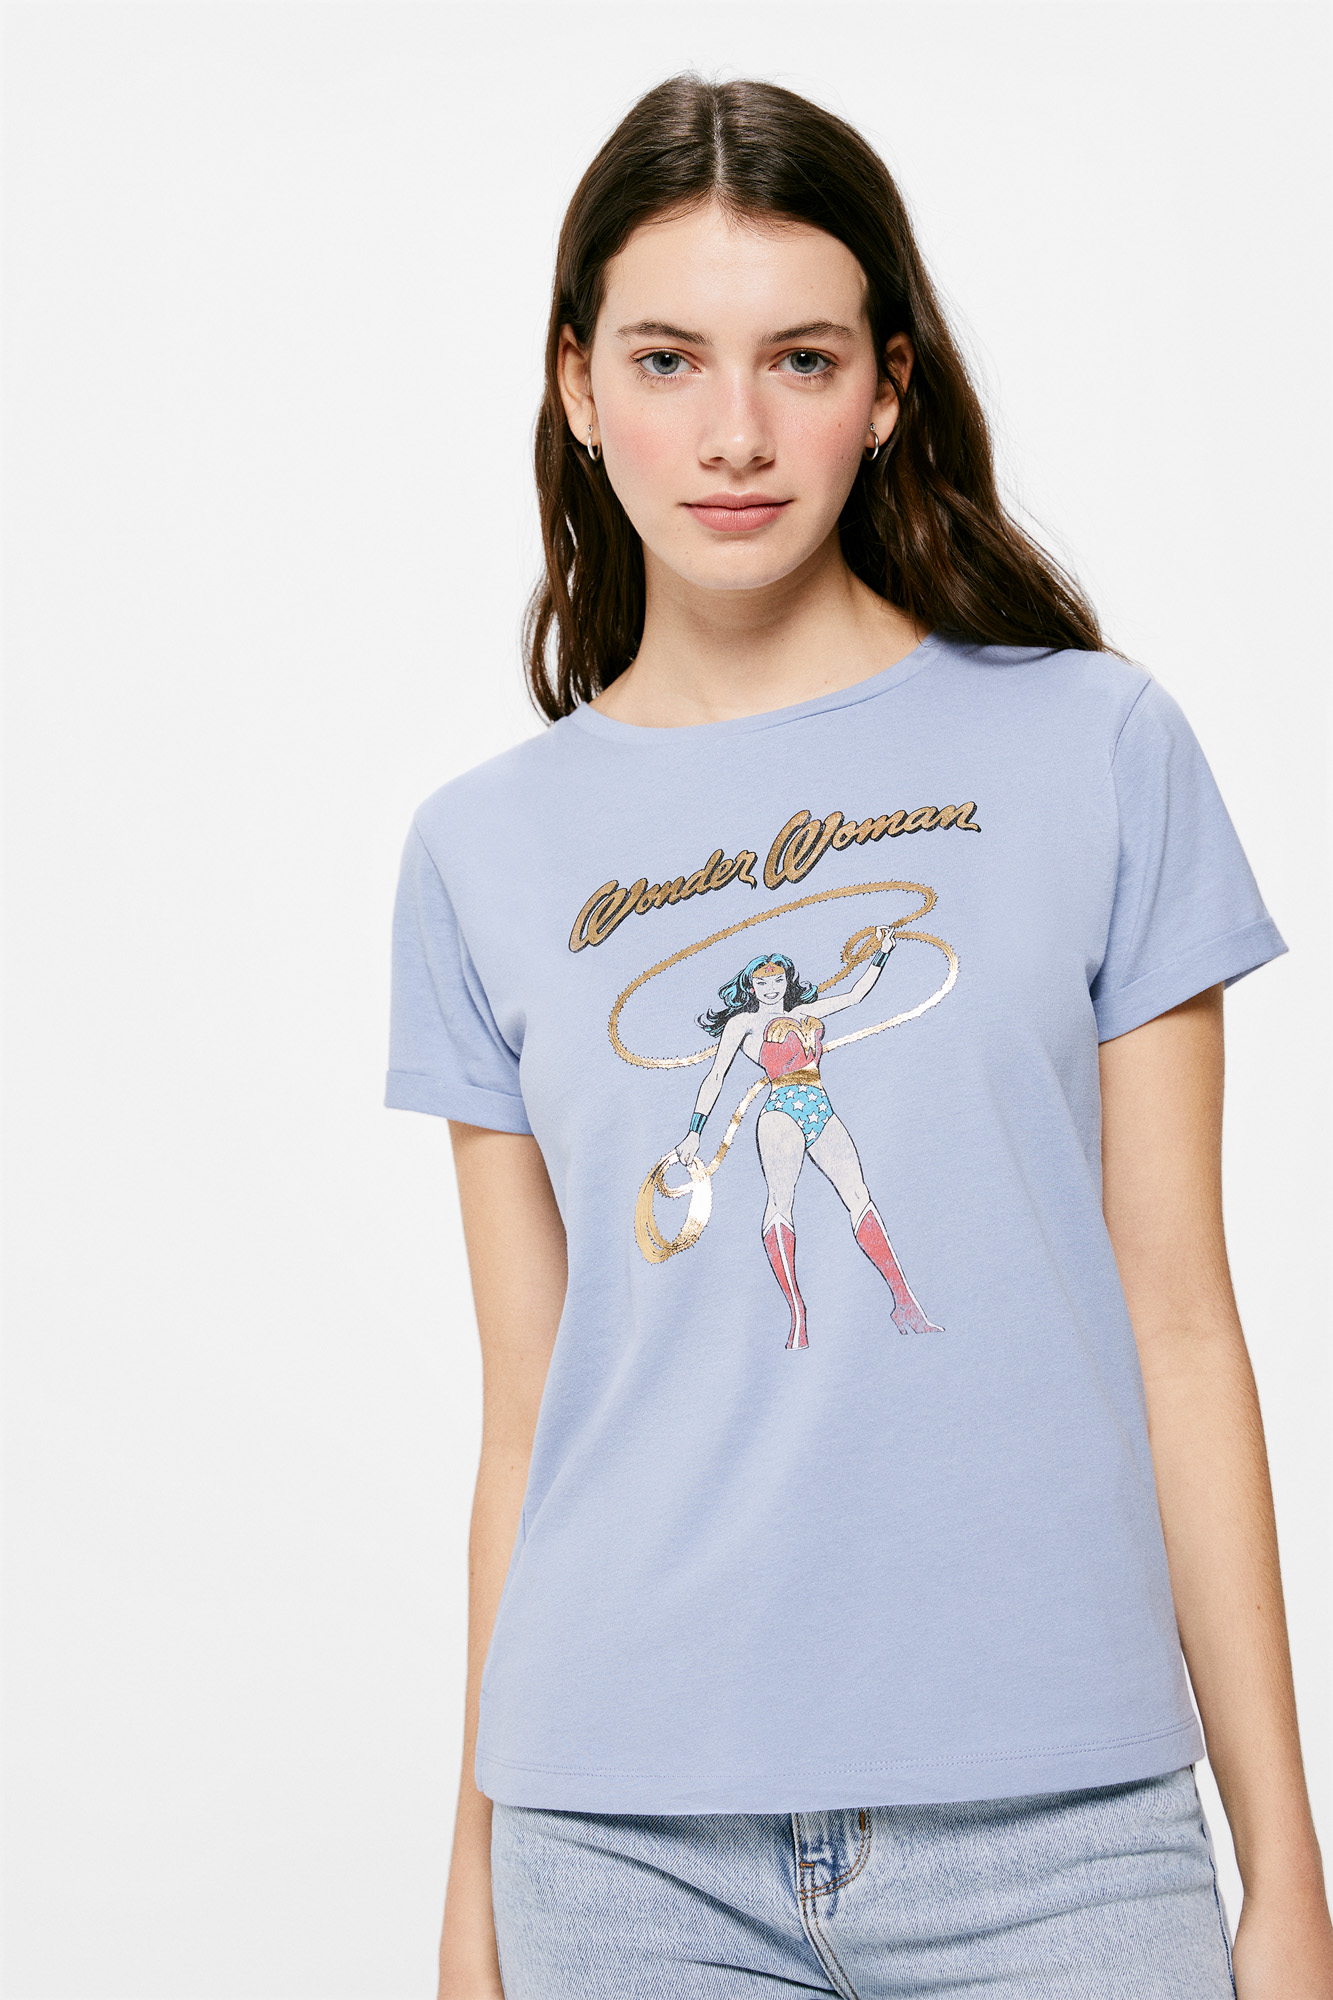 Residente Incompetencia Contribuyente Camiseta "Wonder woman" | Camisetas de mujer | SPF